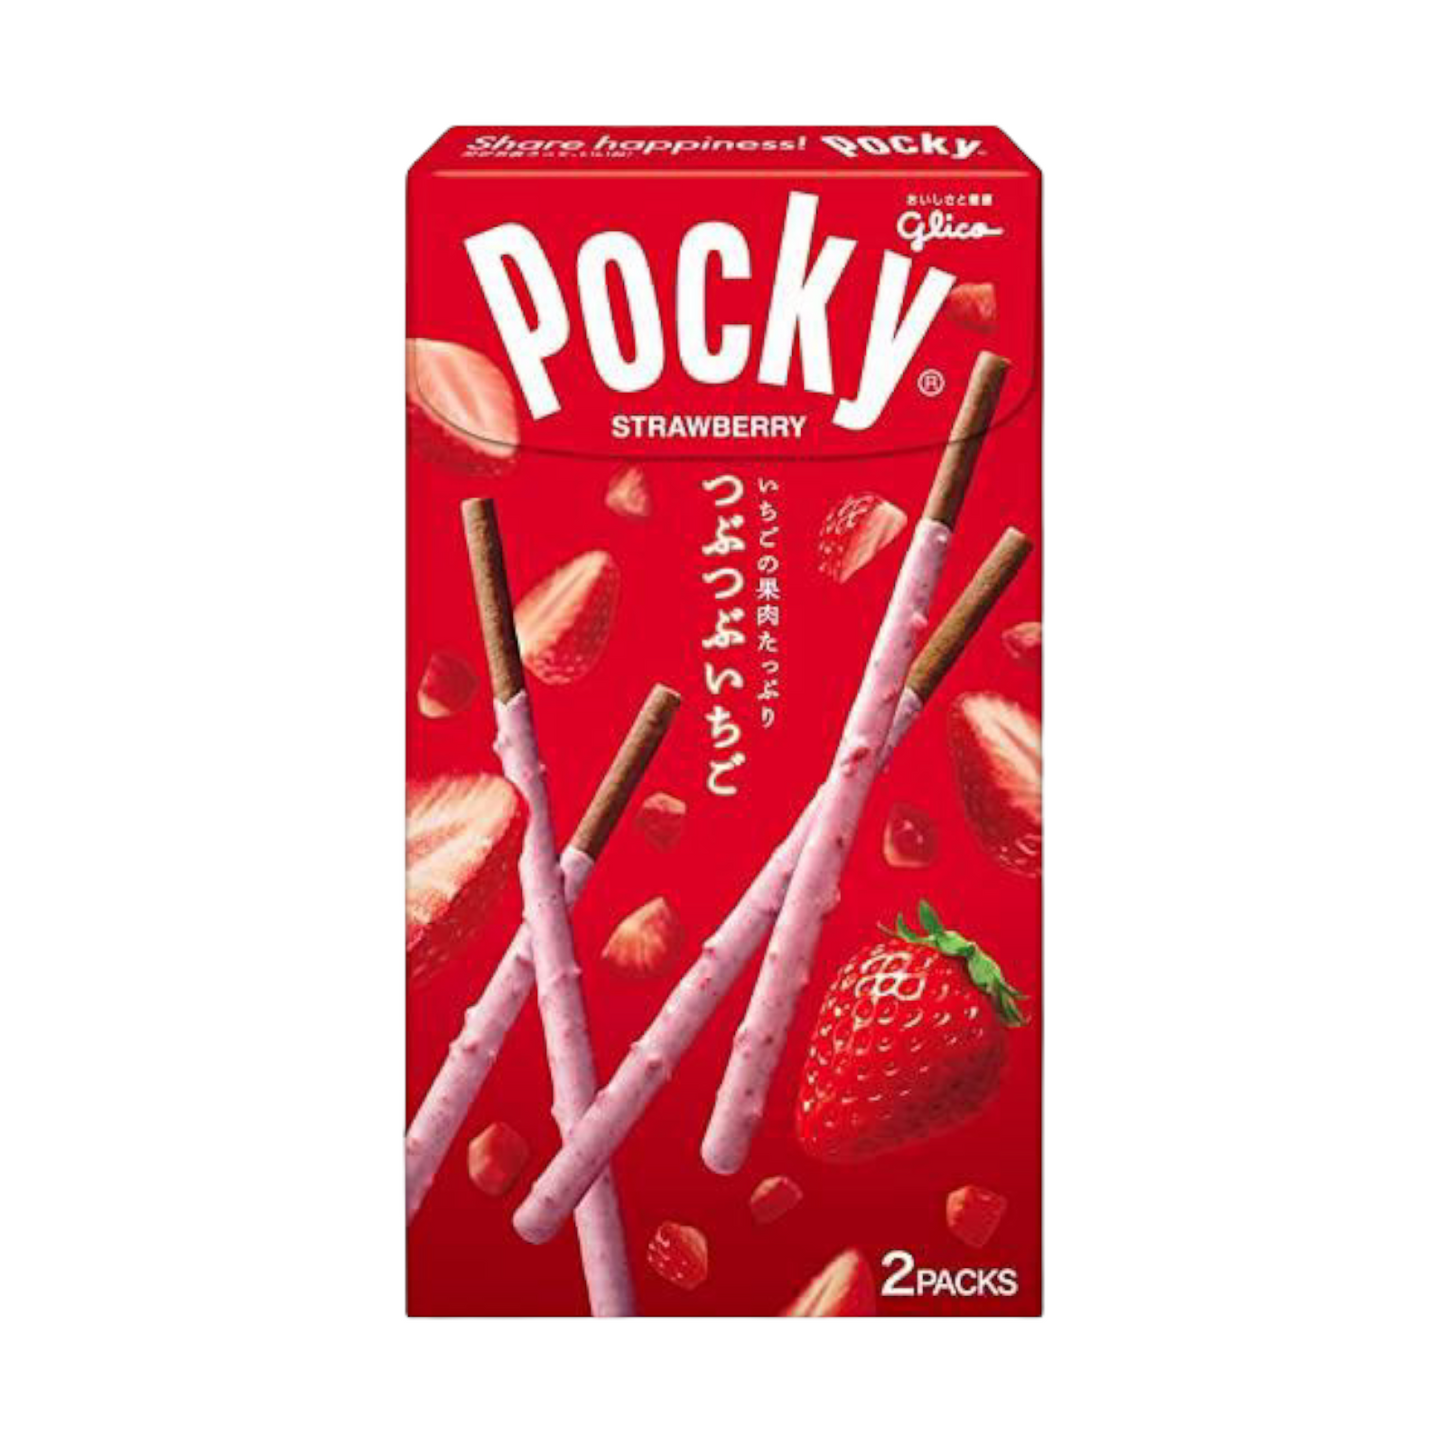 Pocky Crunchy Strawberry - 1.8oz (51g)